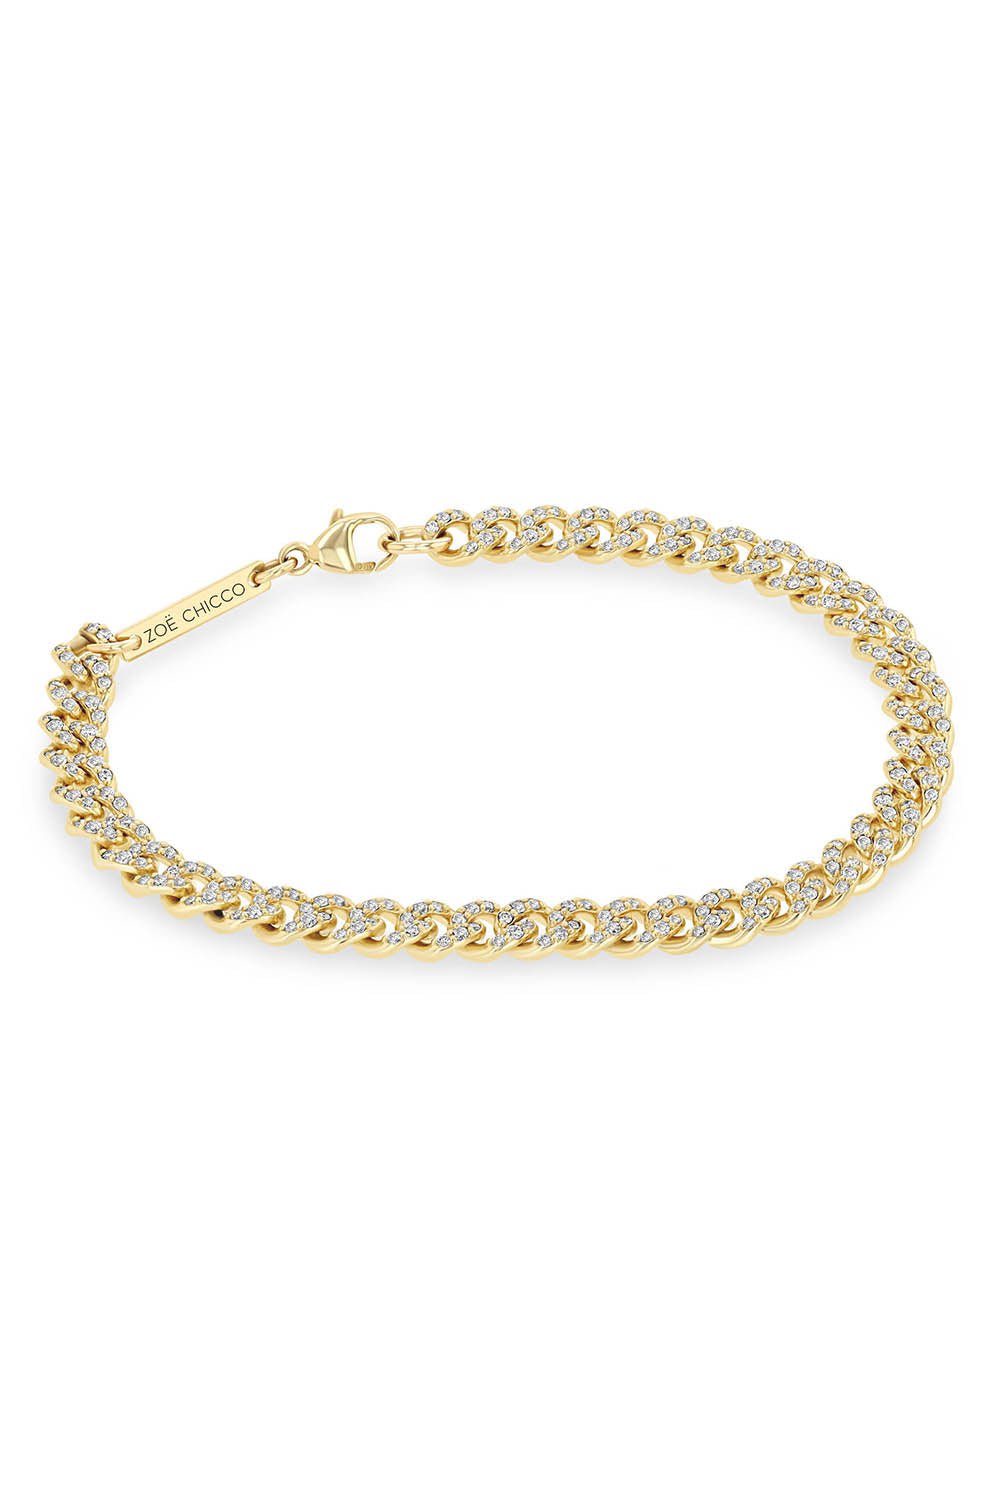 Zoe CHICCO: Medium Curb Chain Bracelet